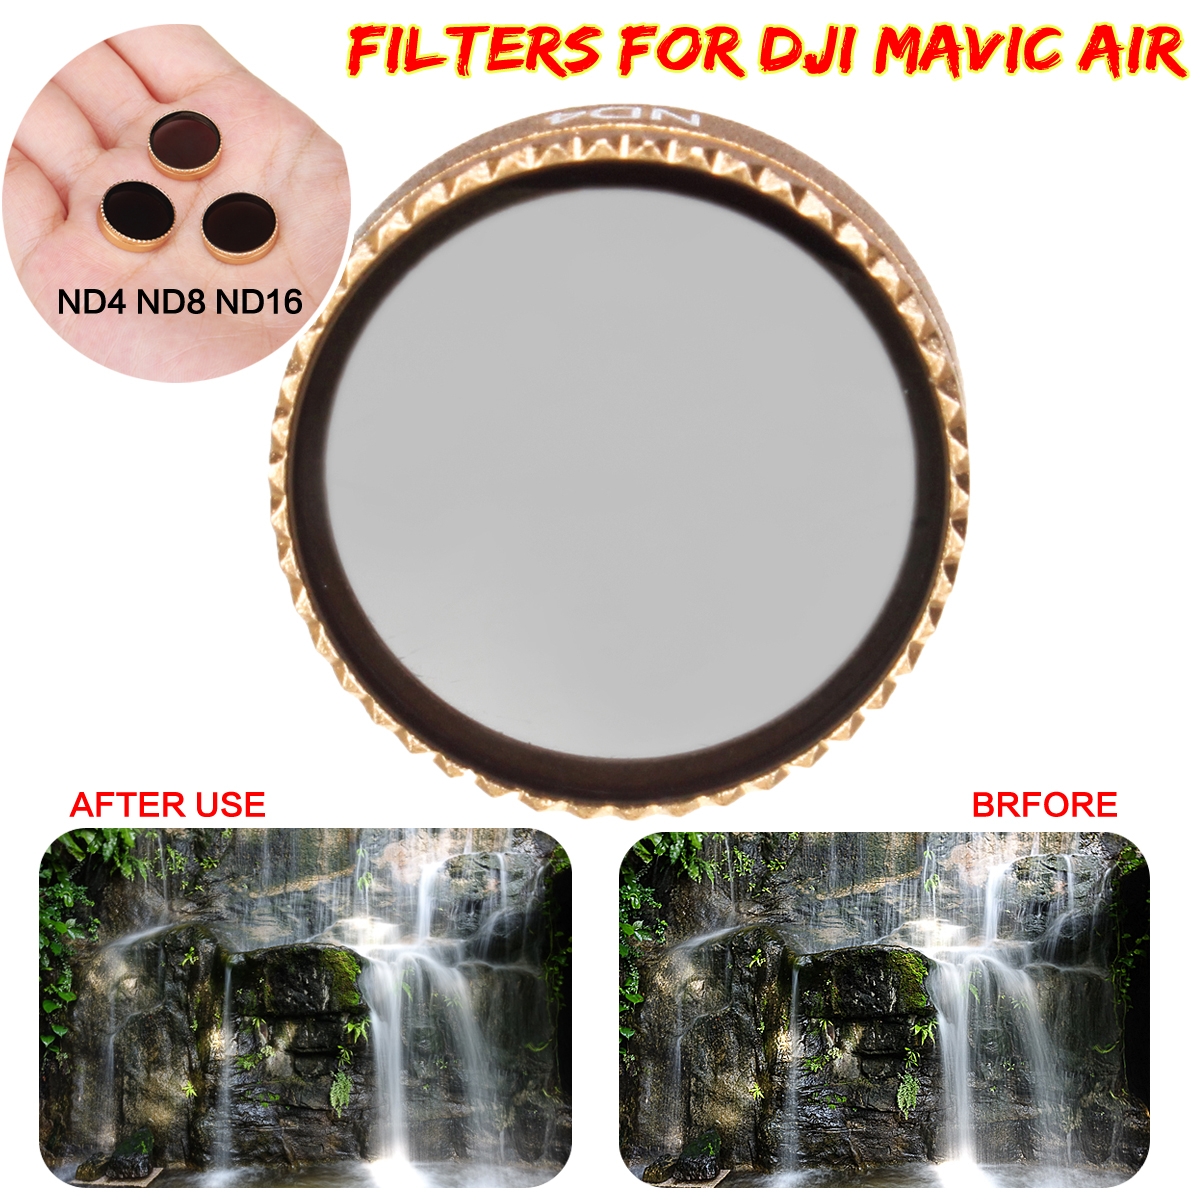 ND4 ND8 ND16 Lens Filter For Cinema Series Vivid Collection DJI Mavic AIR